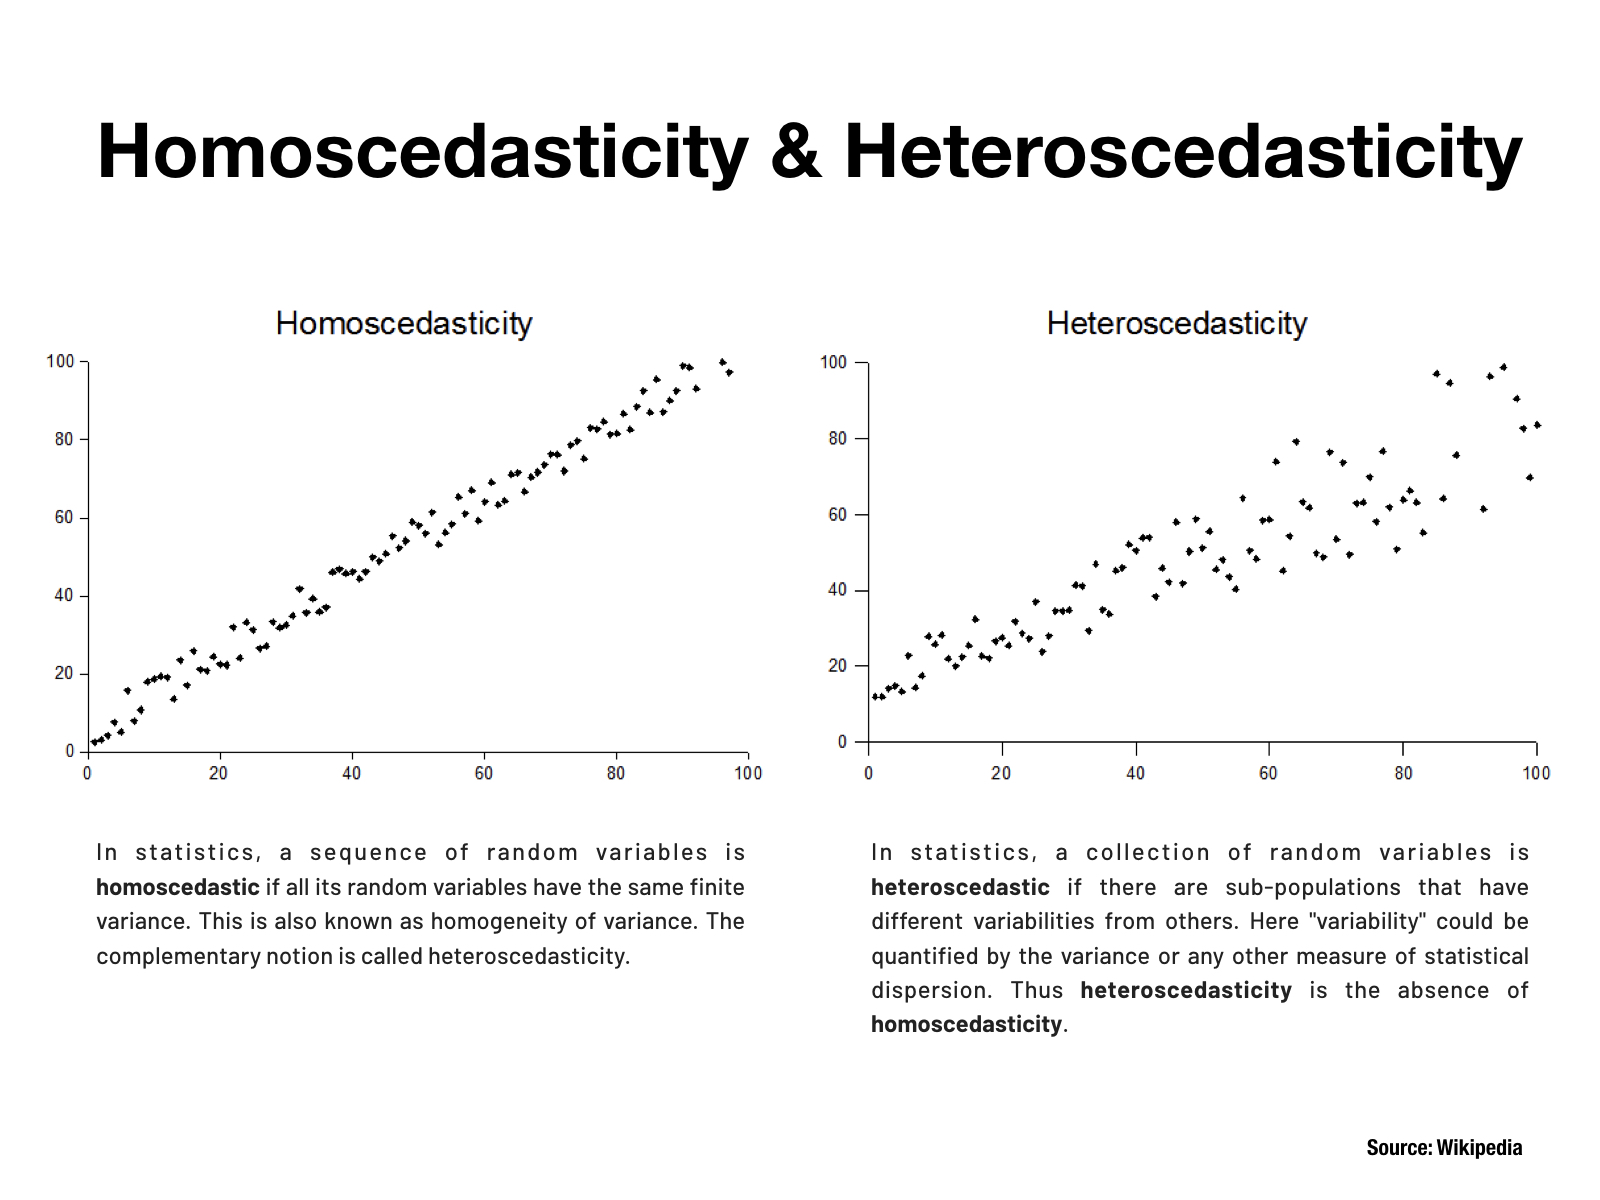 Homoscedasticity & Heteroscedasticity (source: Wikipedia)